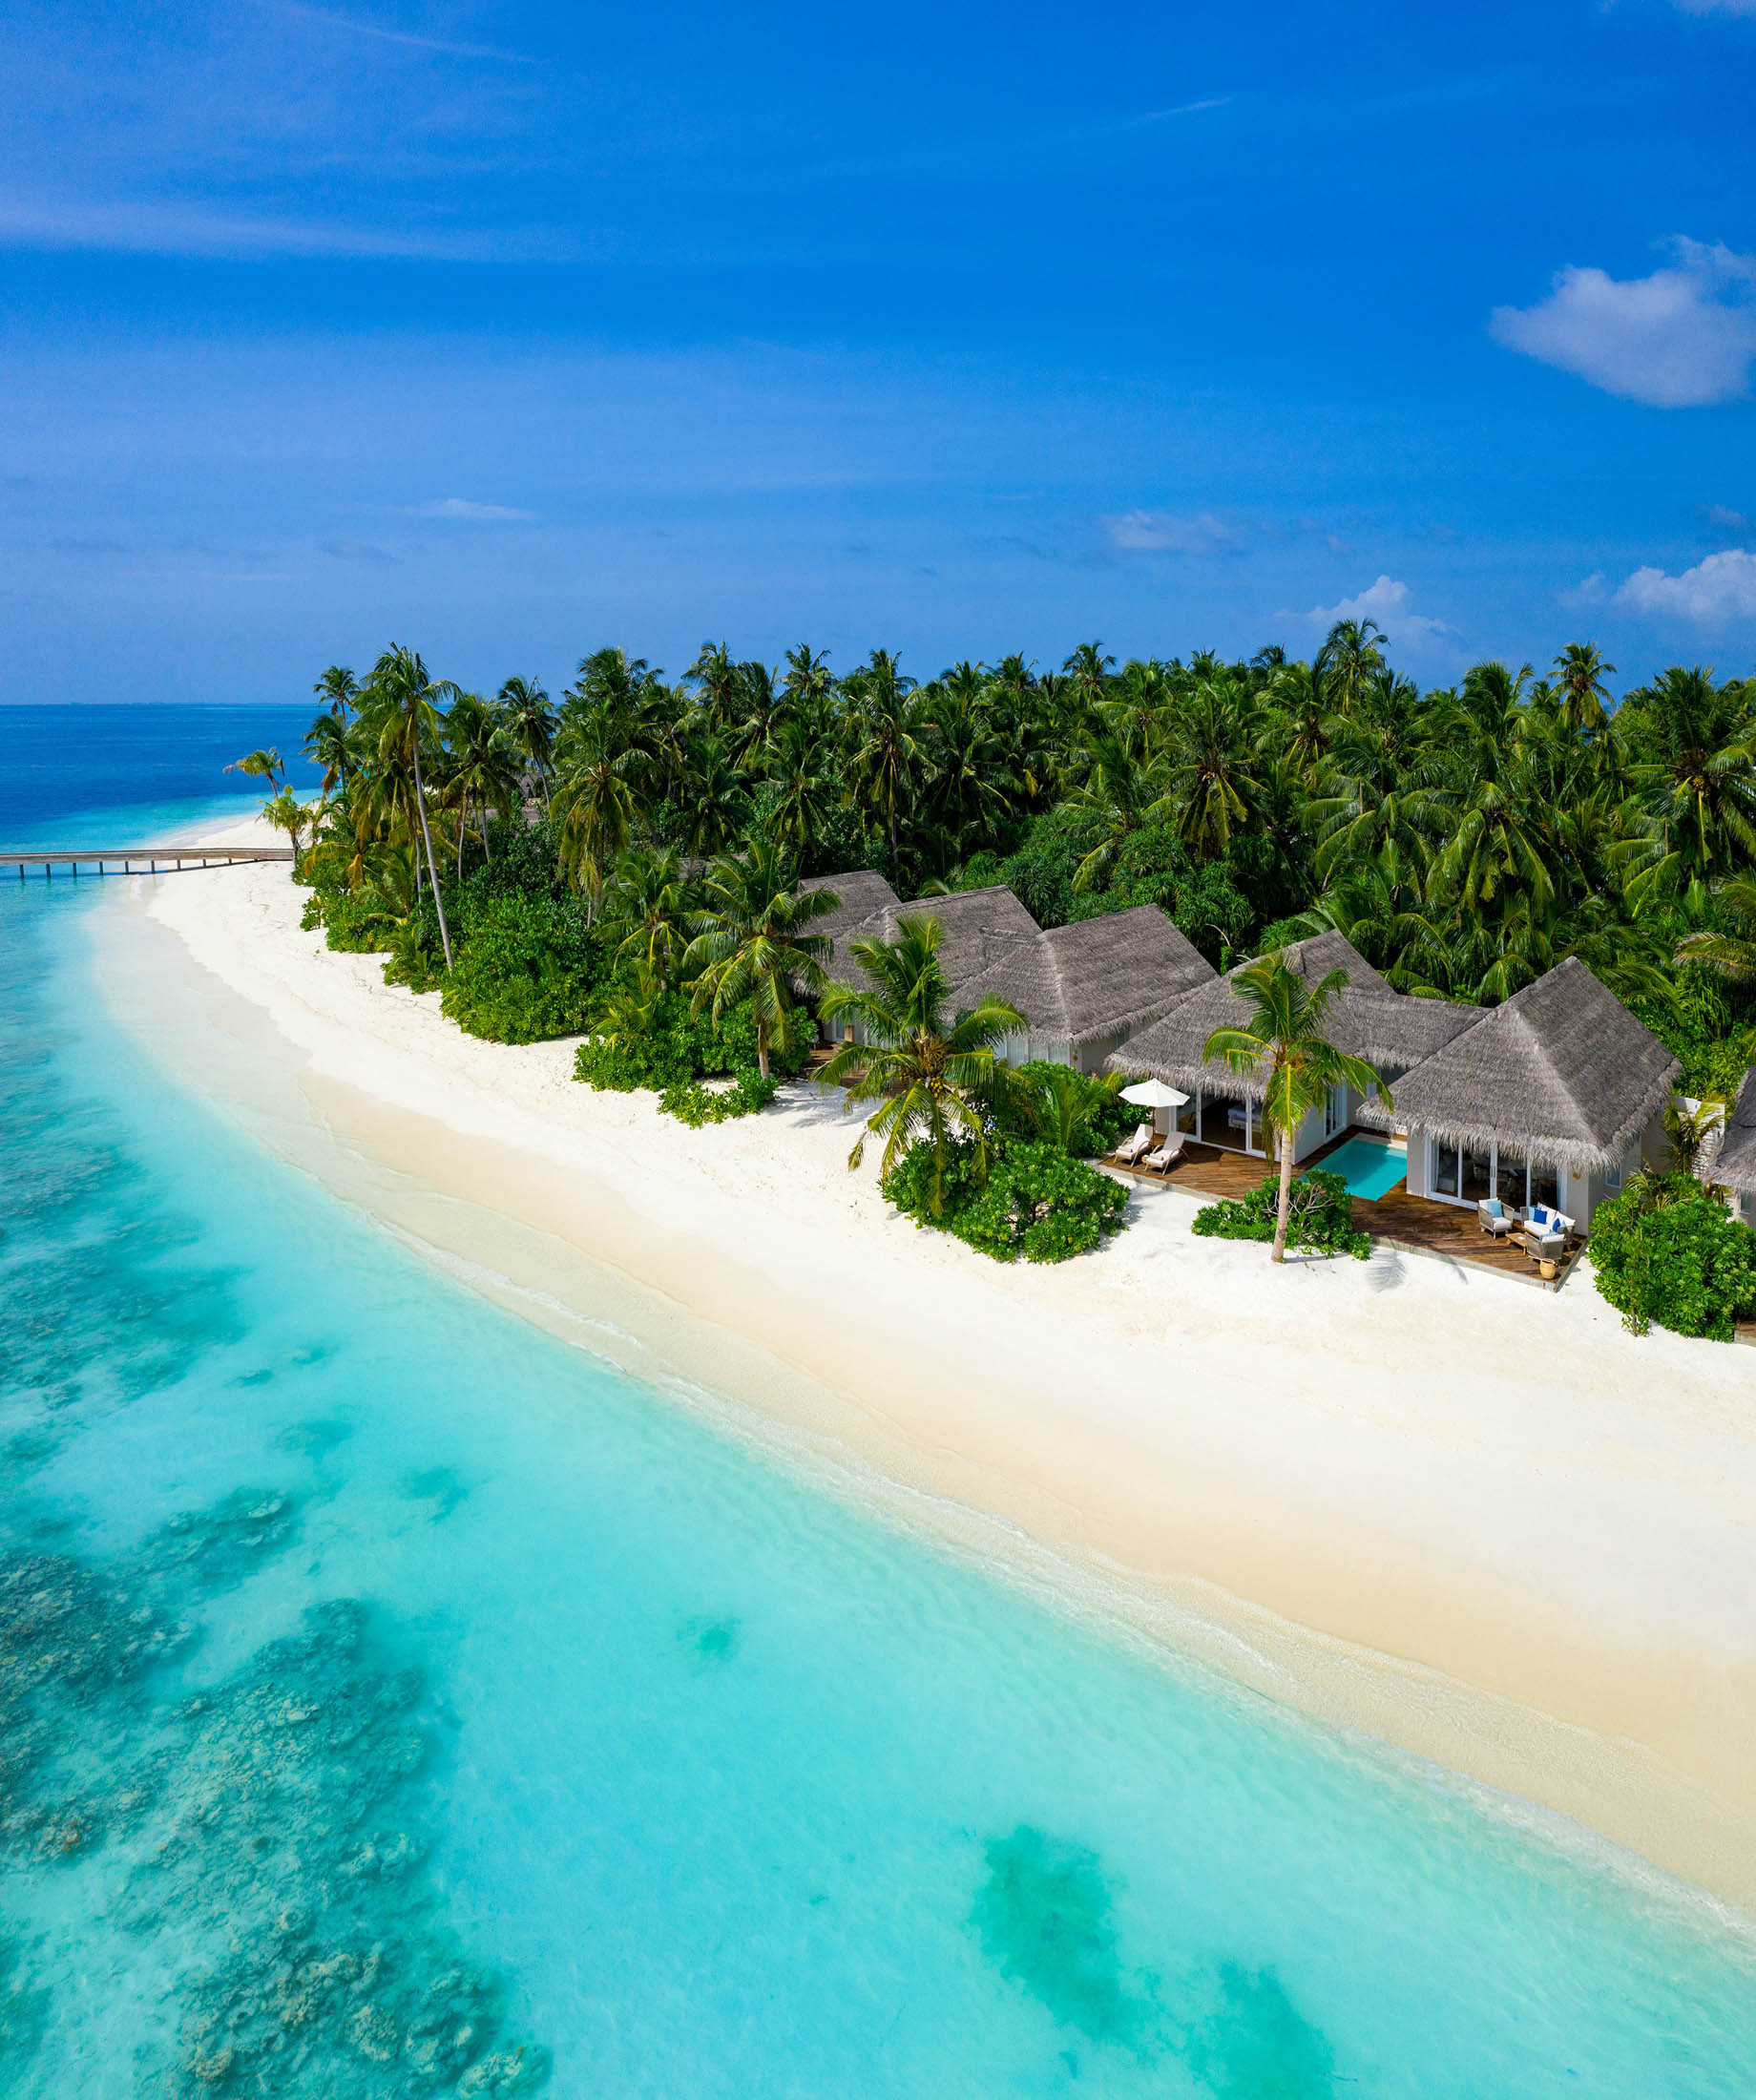 Baglioni Resort Maldives – Maagau Island, Rinbudhoo, Maldives – Beach Villa Aerial View